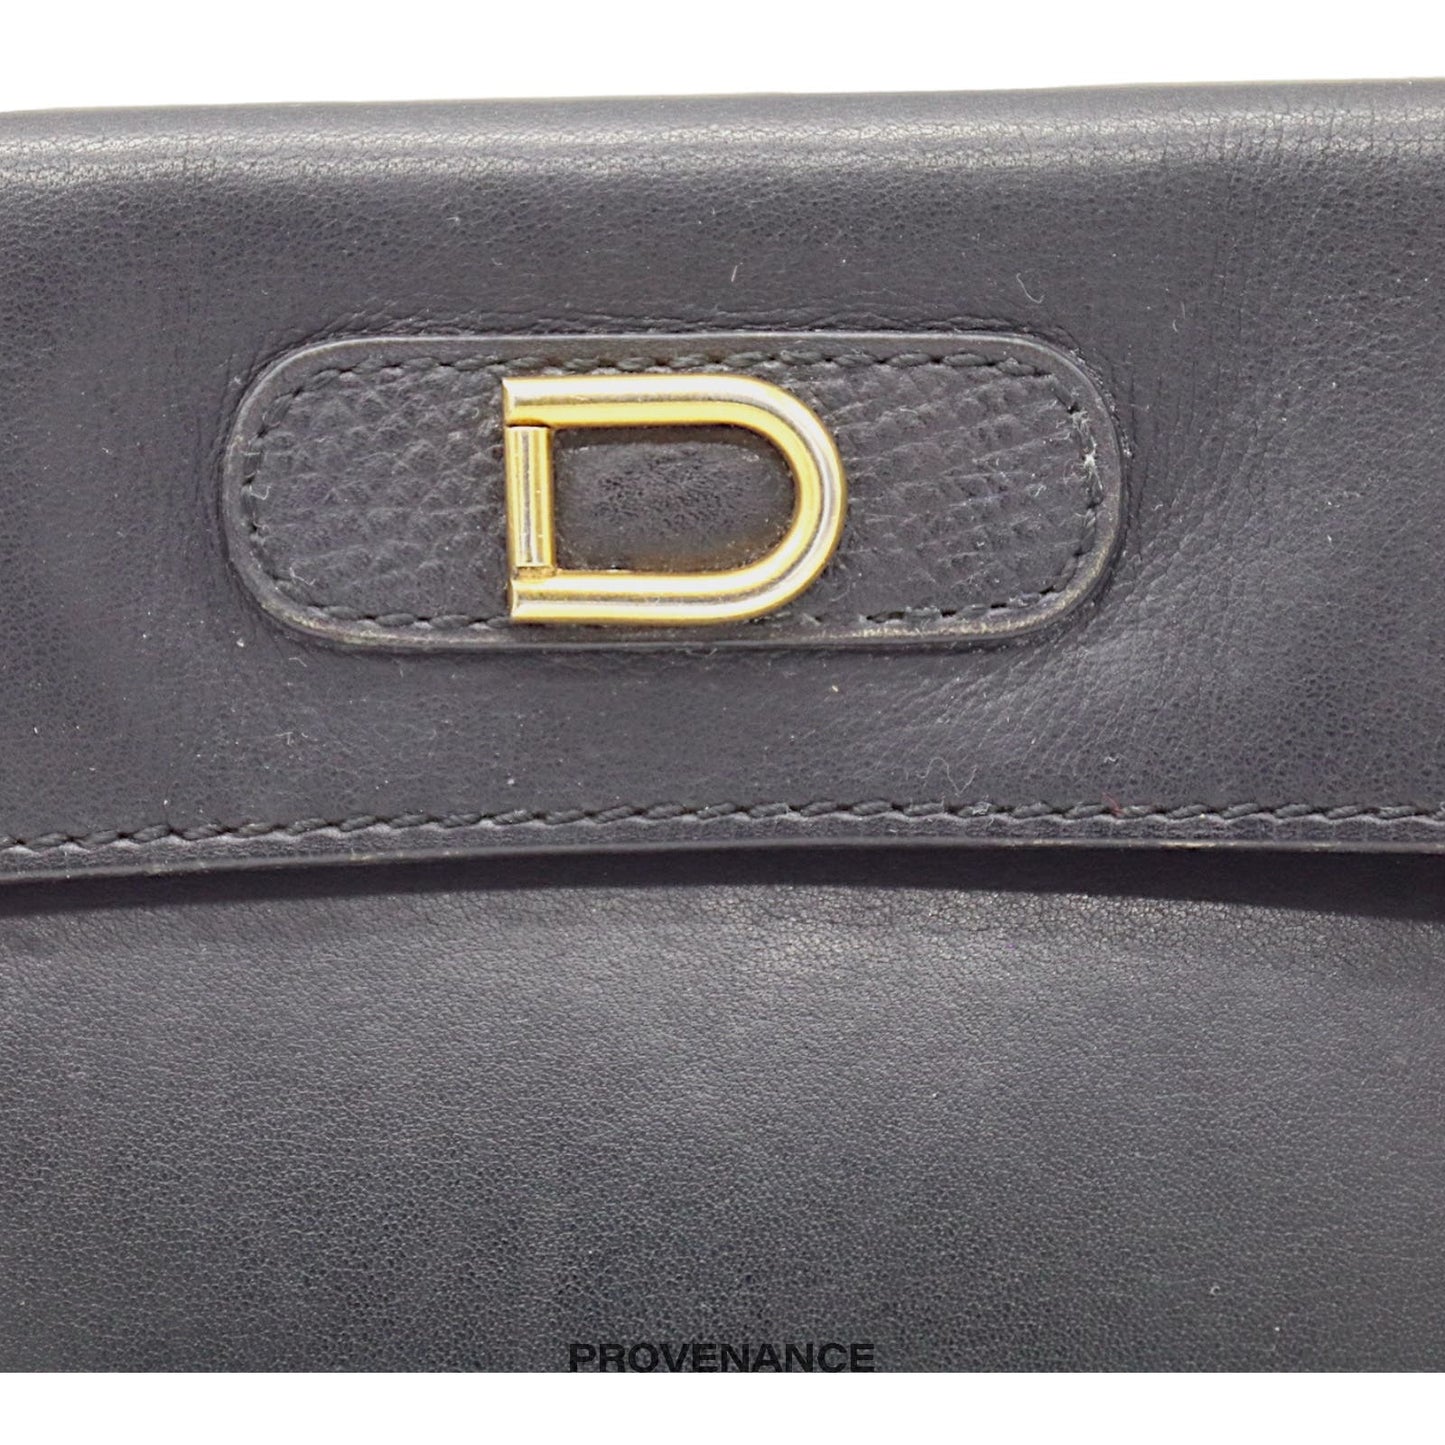 🔴 Delvaux D Clutch Bag - Black Calfskin Leather